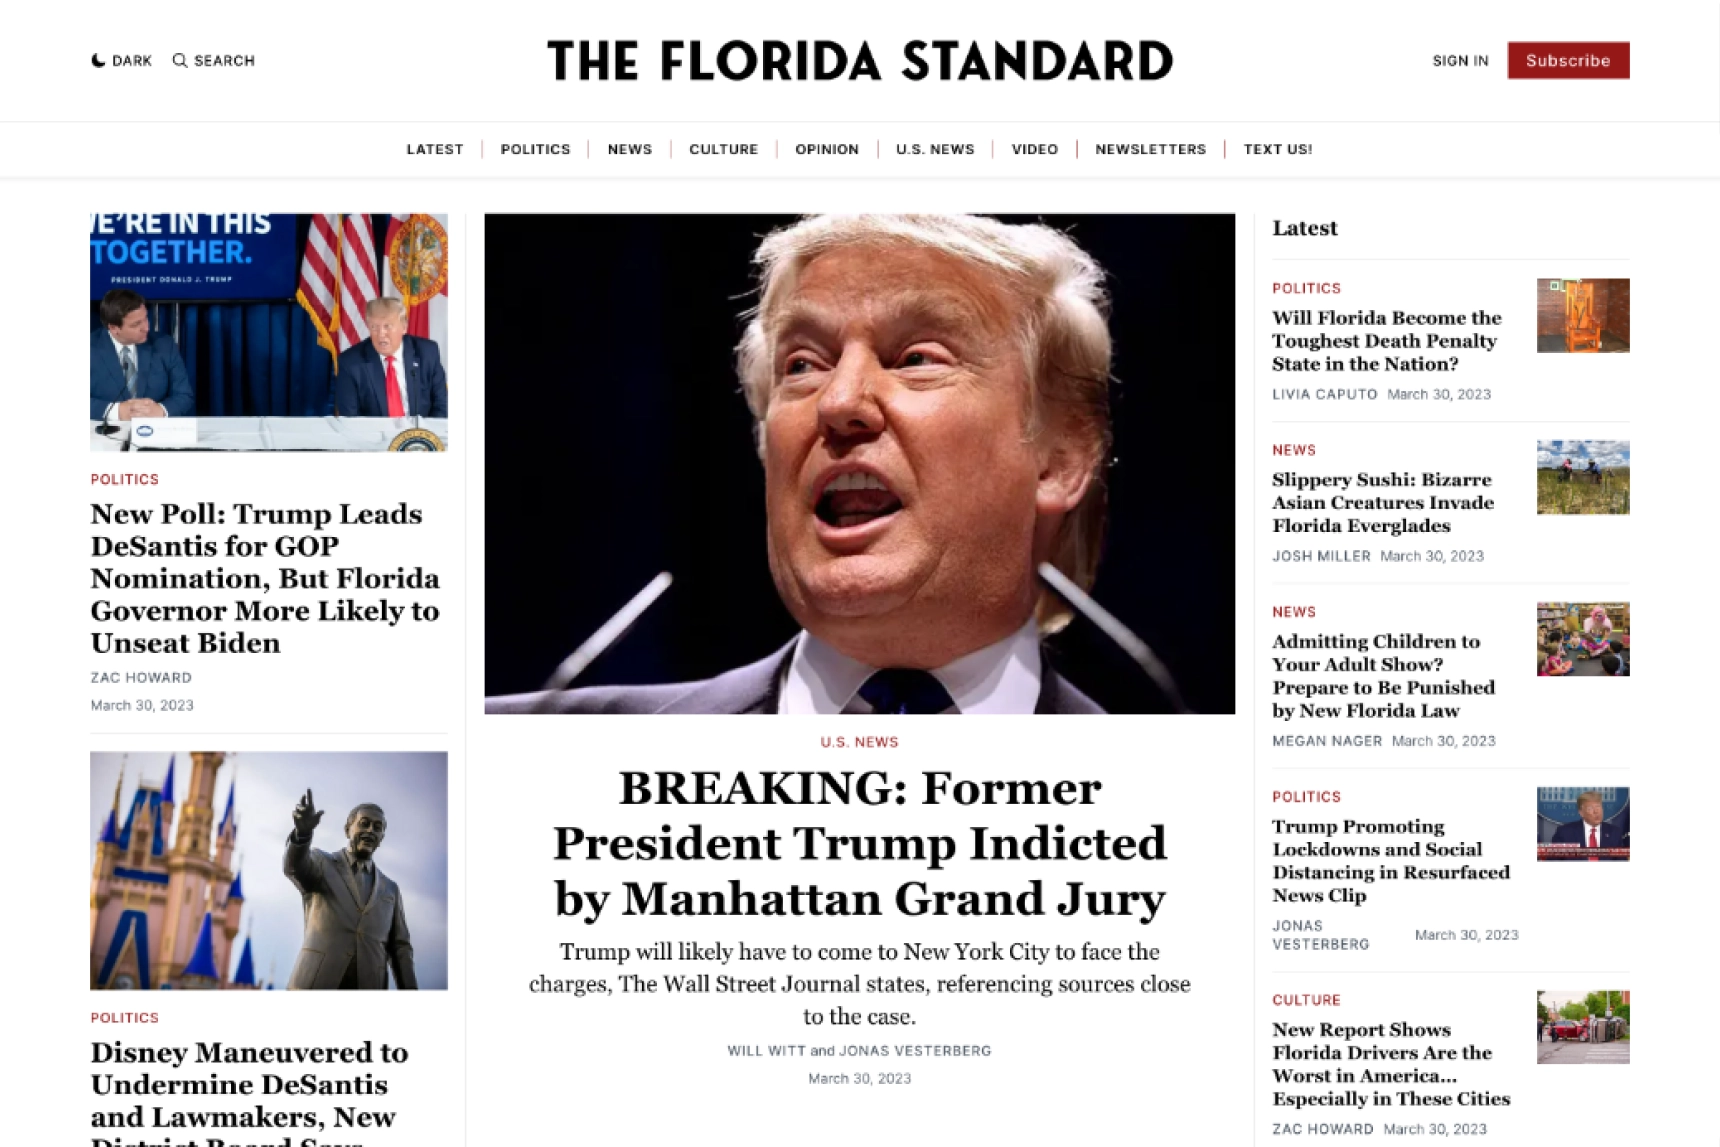 The Florida Standard